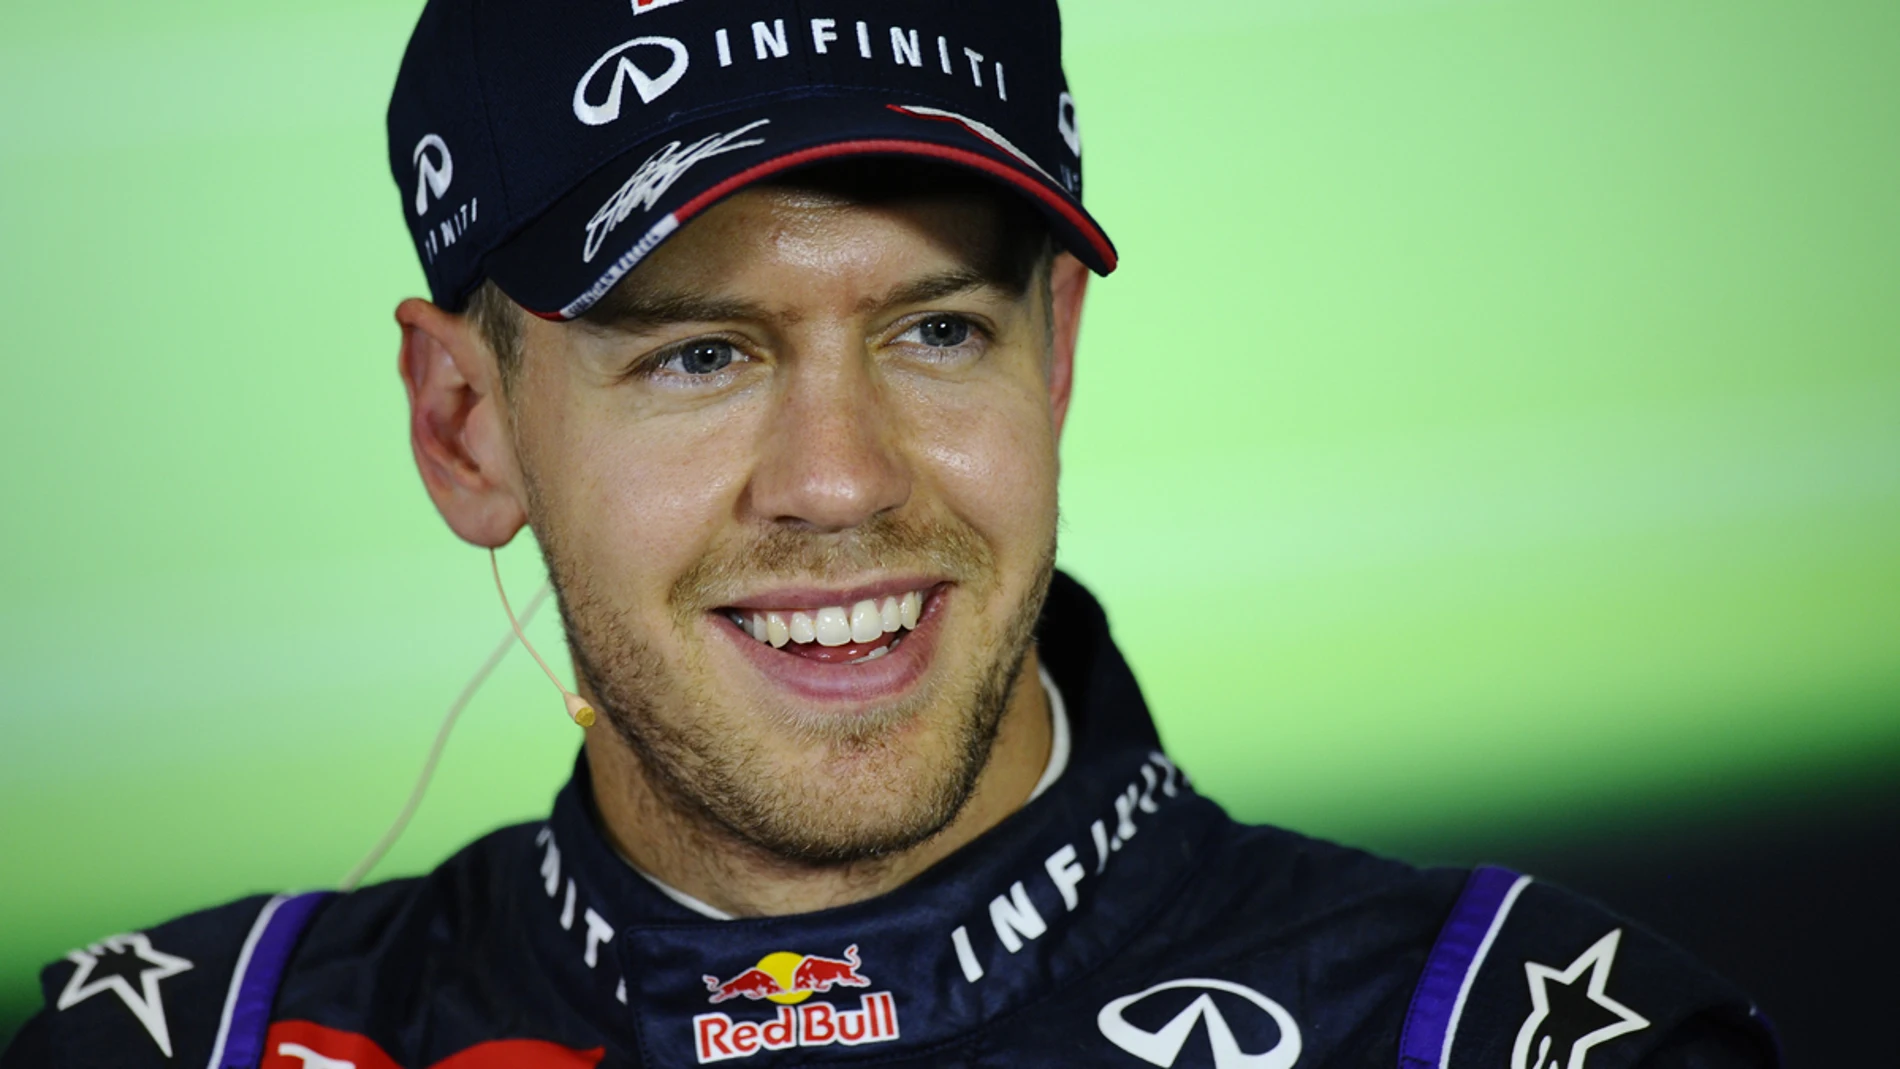 Vettel habla en rueda de prensa